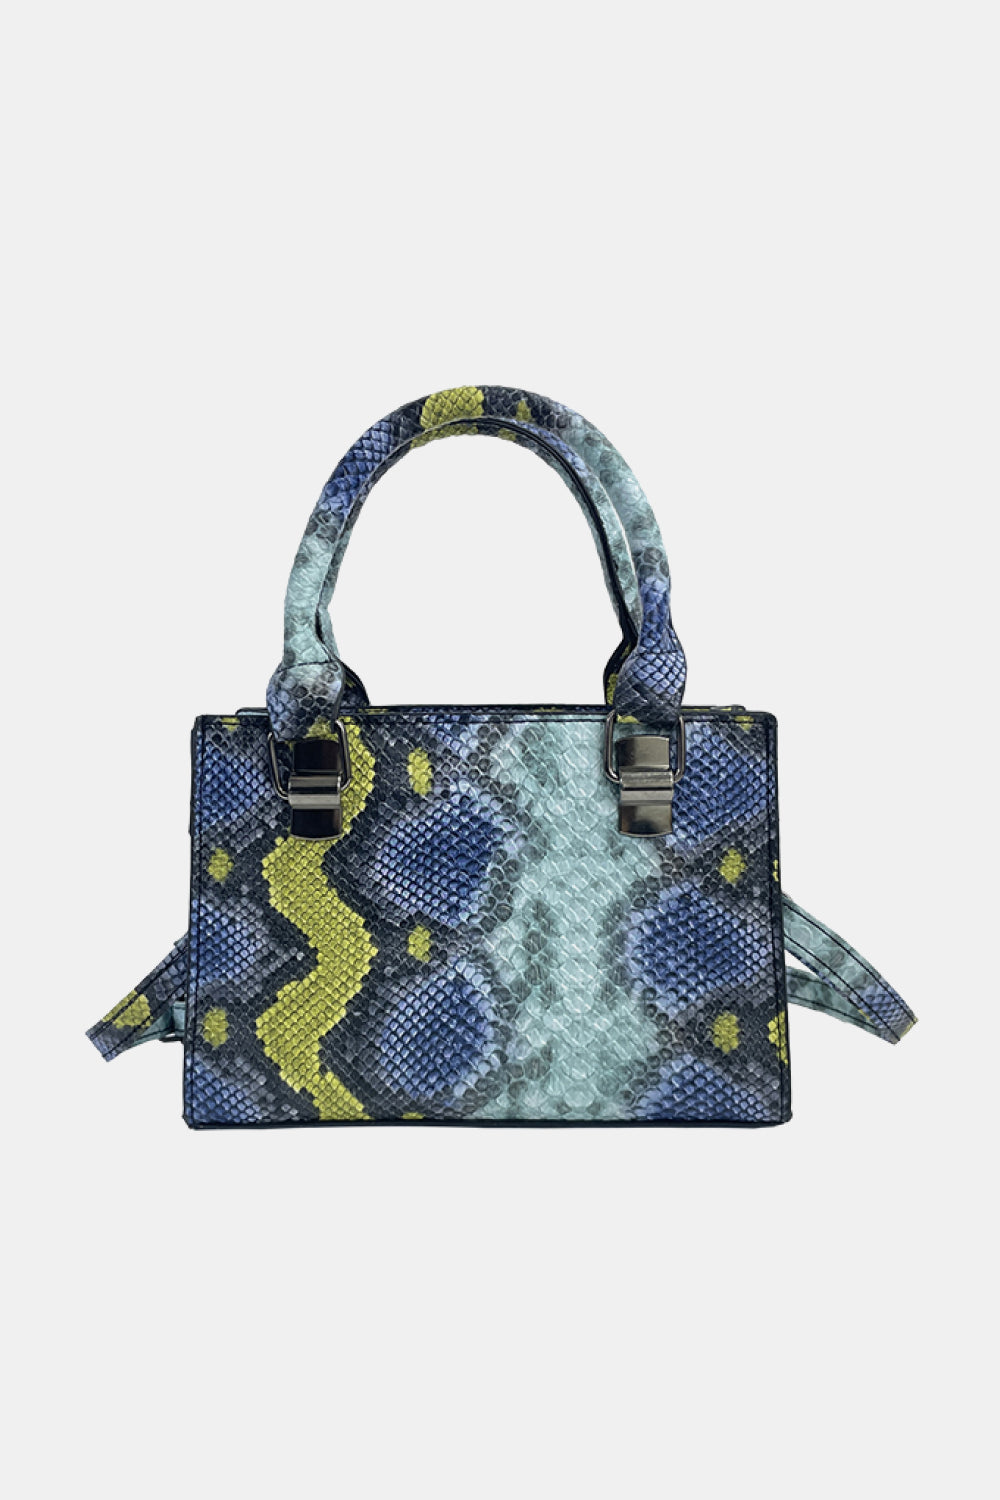 Snakeskin Print PU Leather Handbag